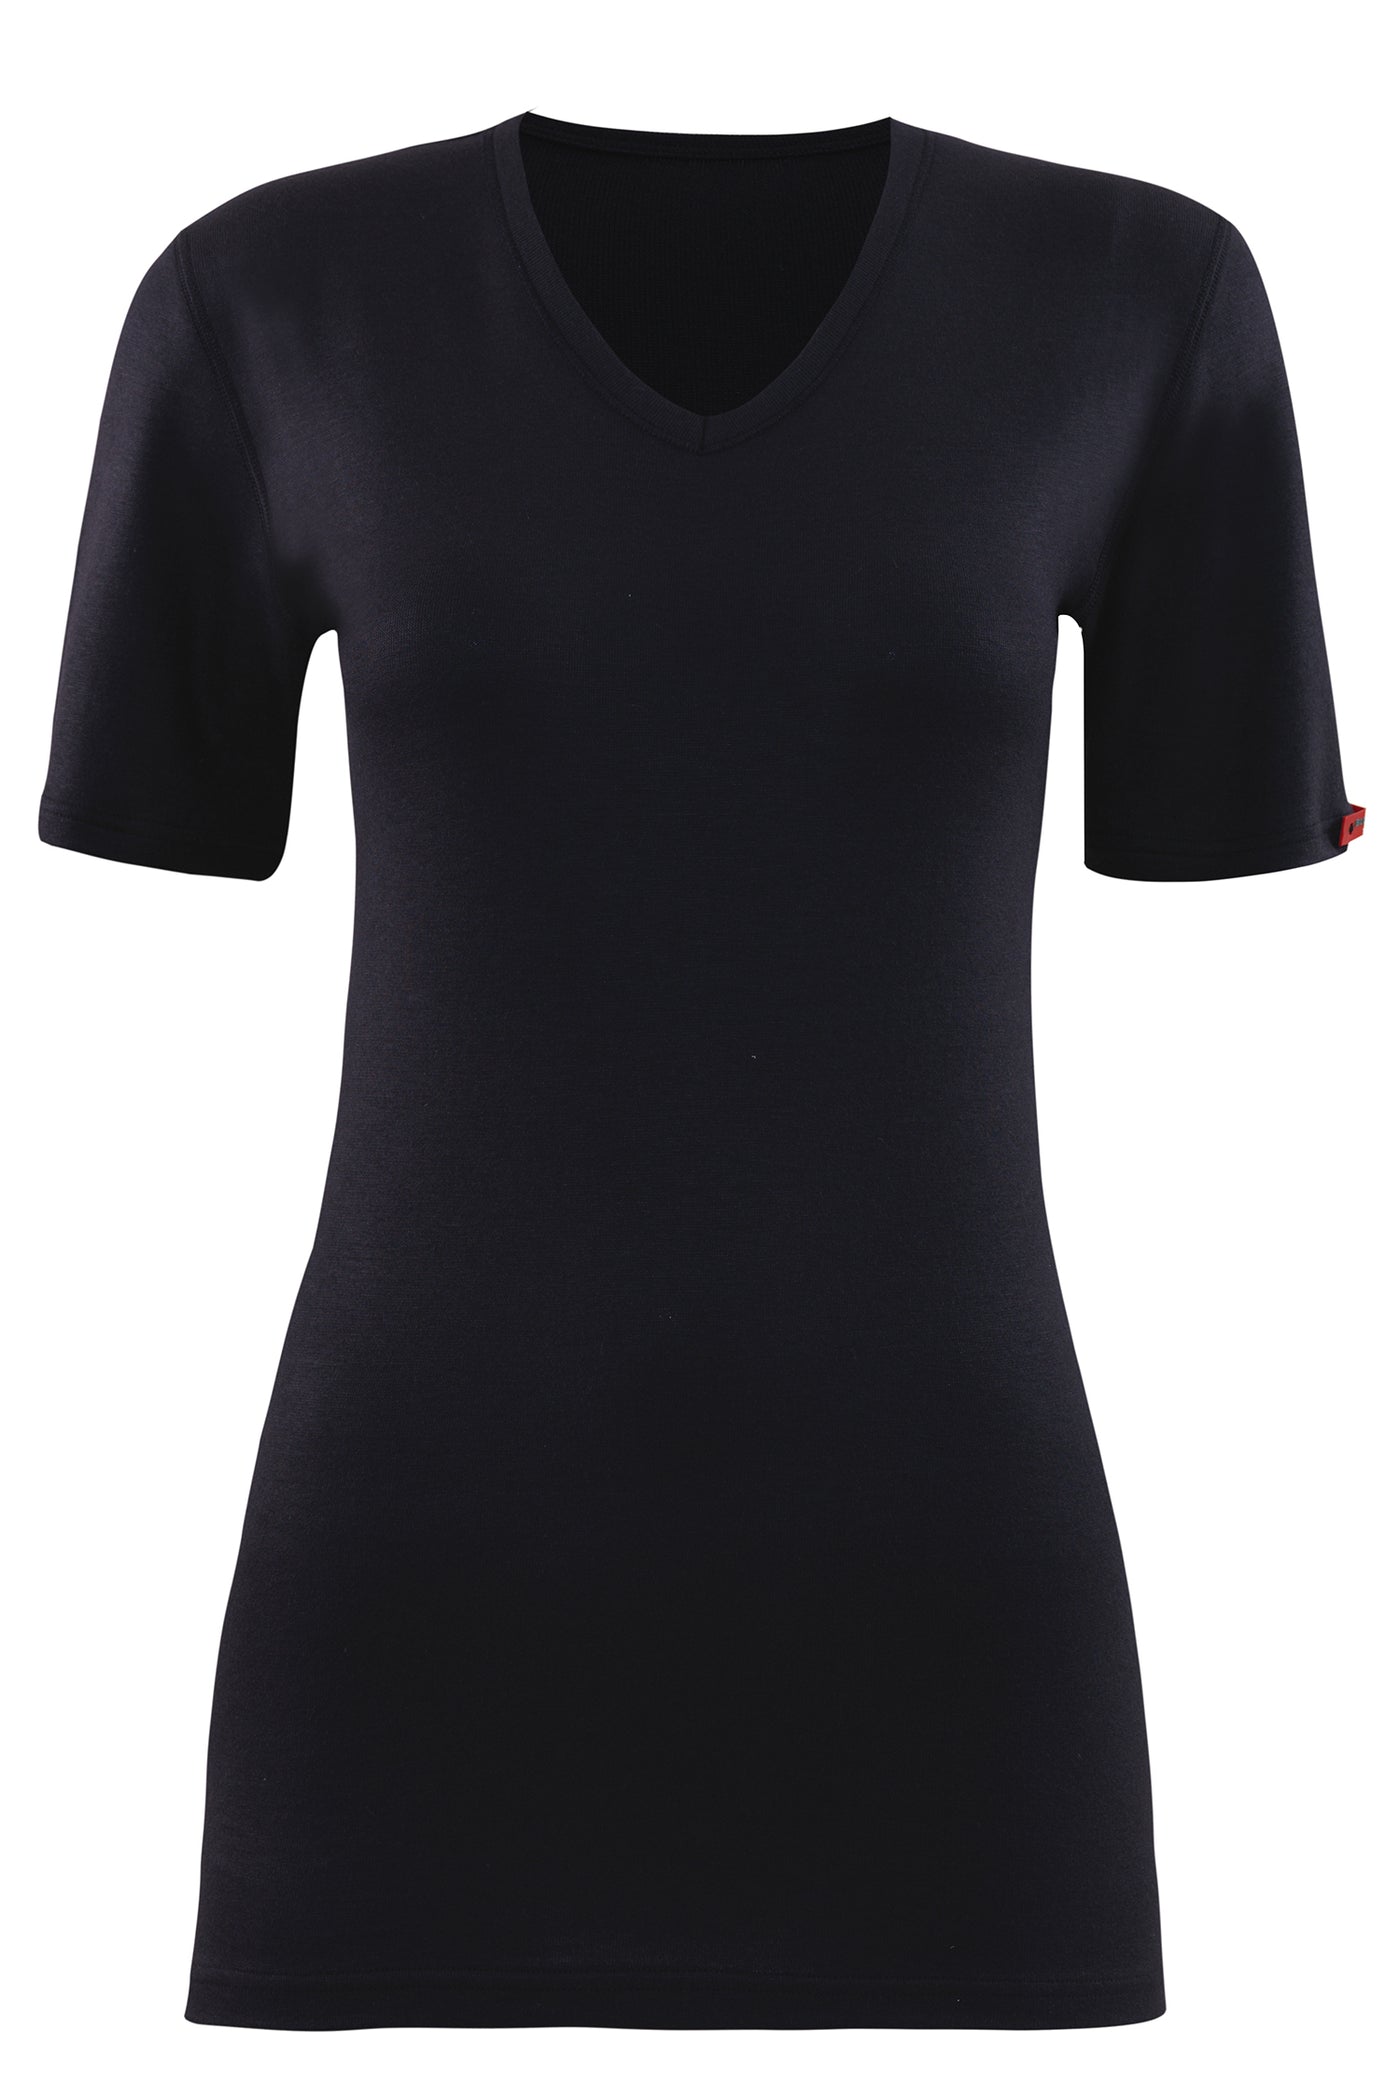 blackspade-Ladies' thermal t-shirt-1263, level-2-underwear-black